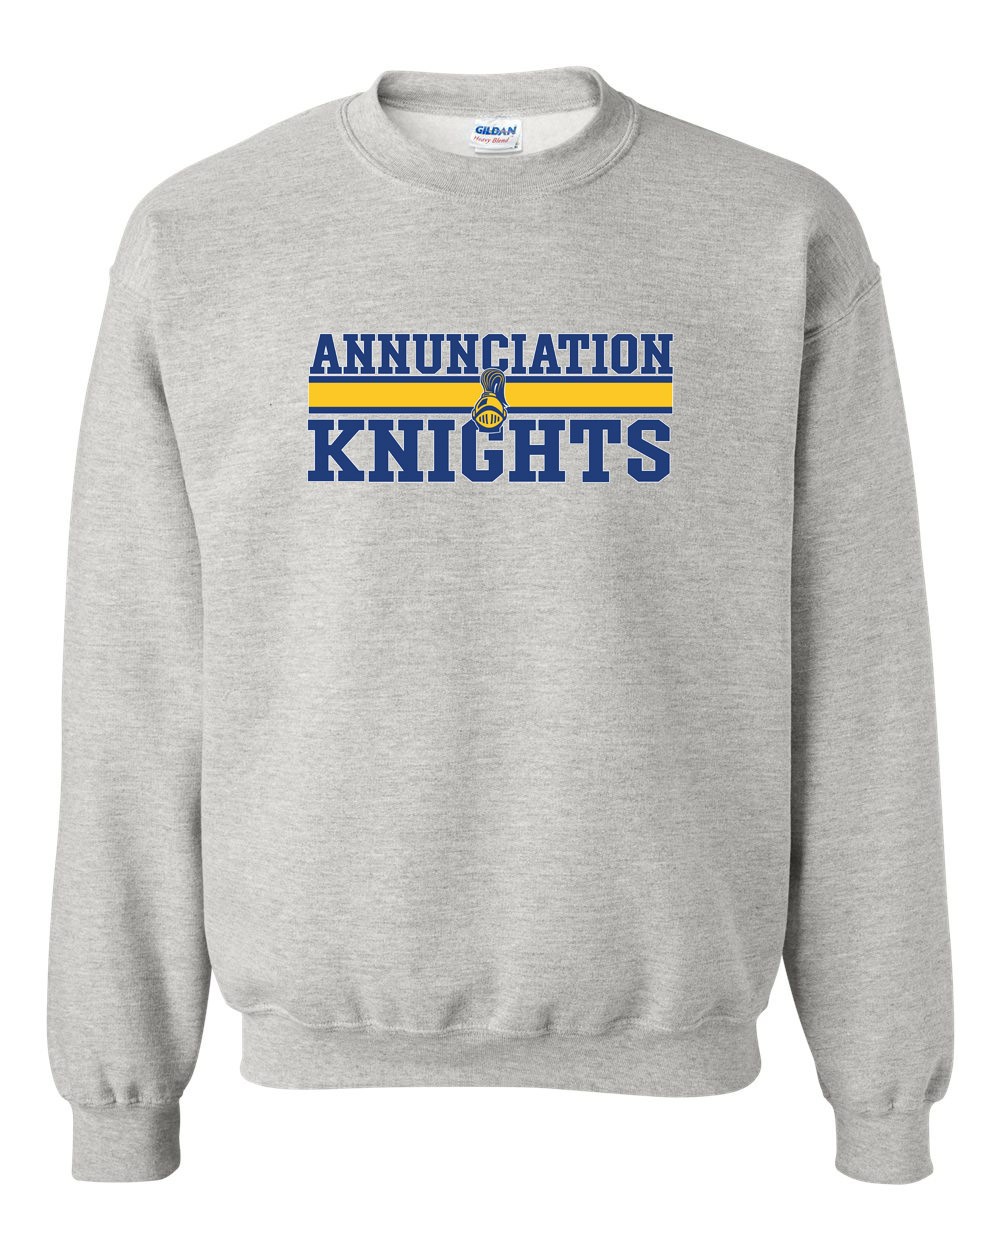 ANN Spirit Sweatshirt w/ Annunciation Knights Logo - Please Allow 2-3 Weeks for Delivery